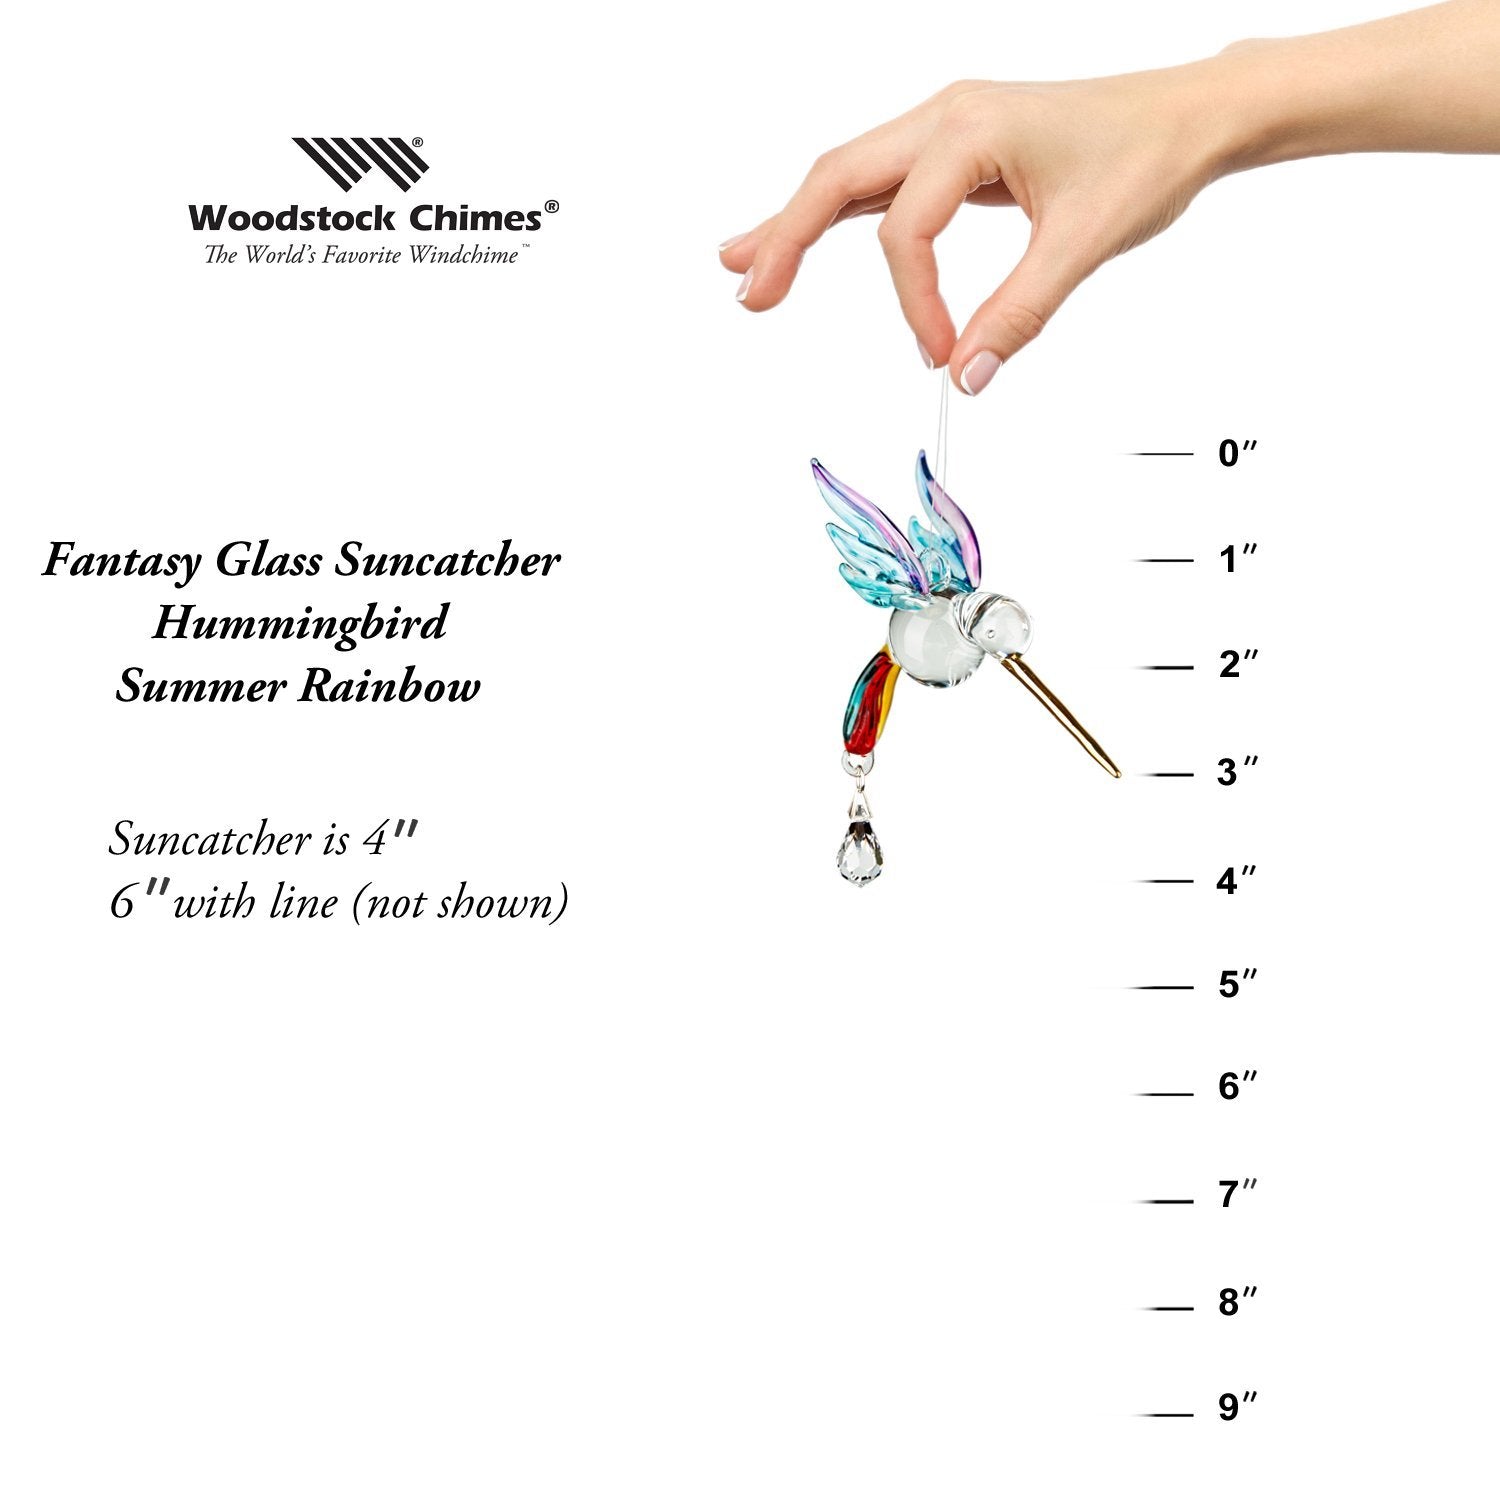 Fantasy Glass Suncatcher - Hummingbird, Summer Rainbow proportion image